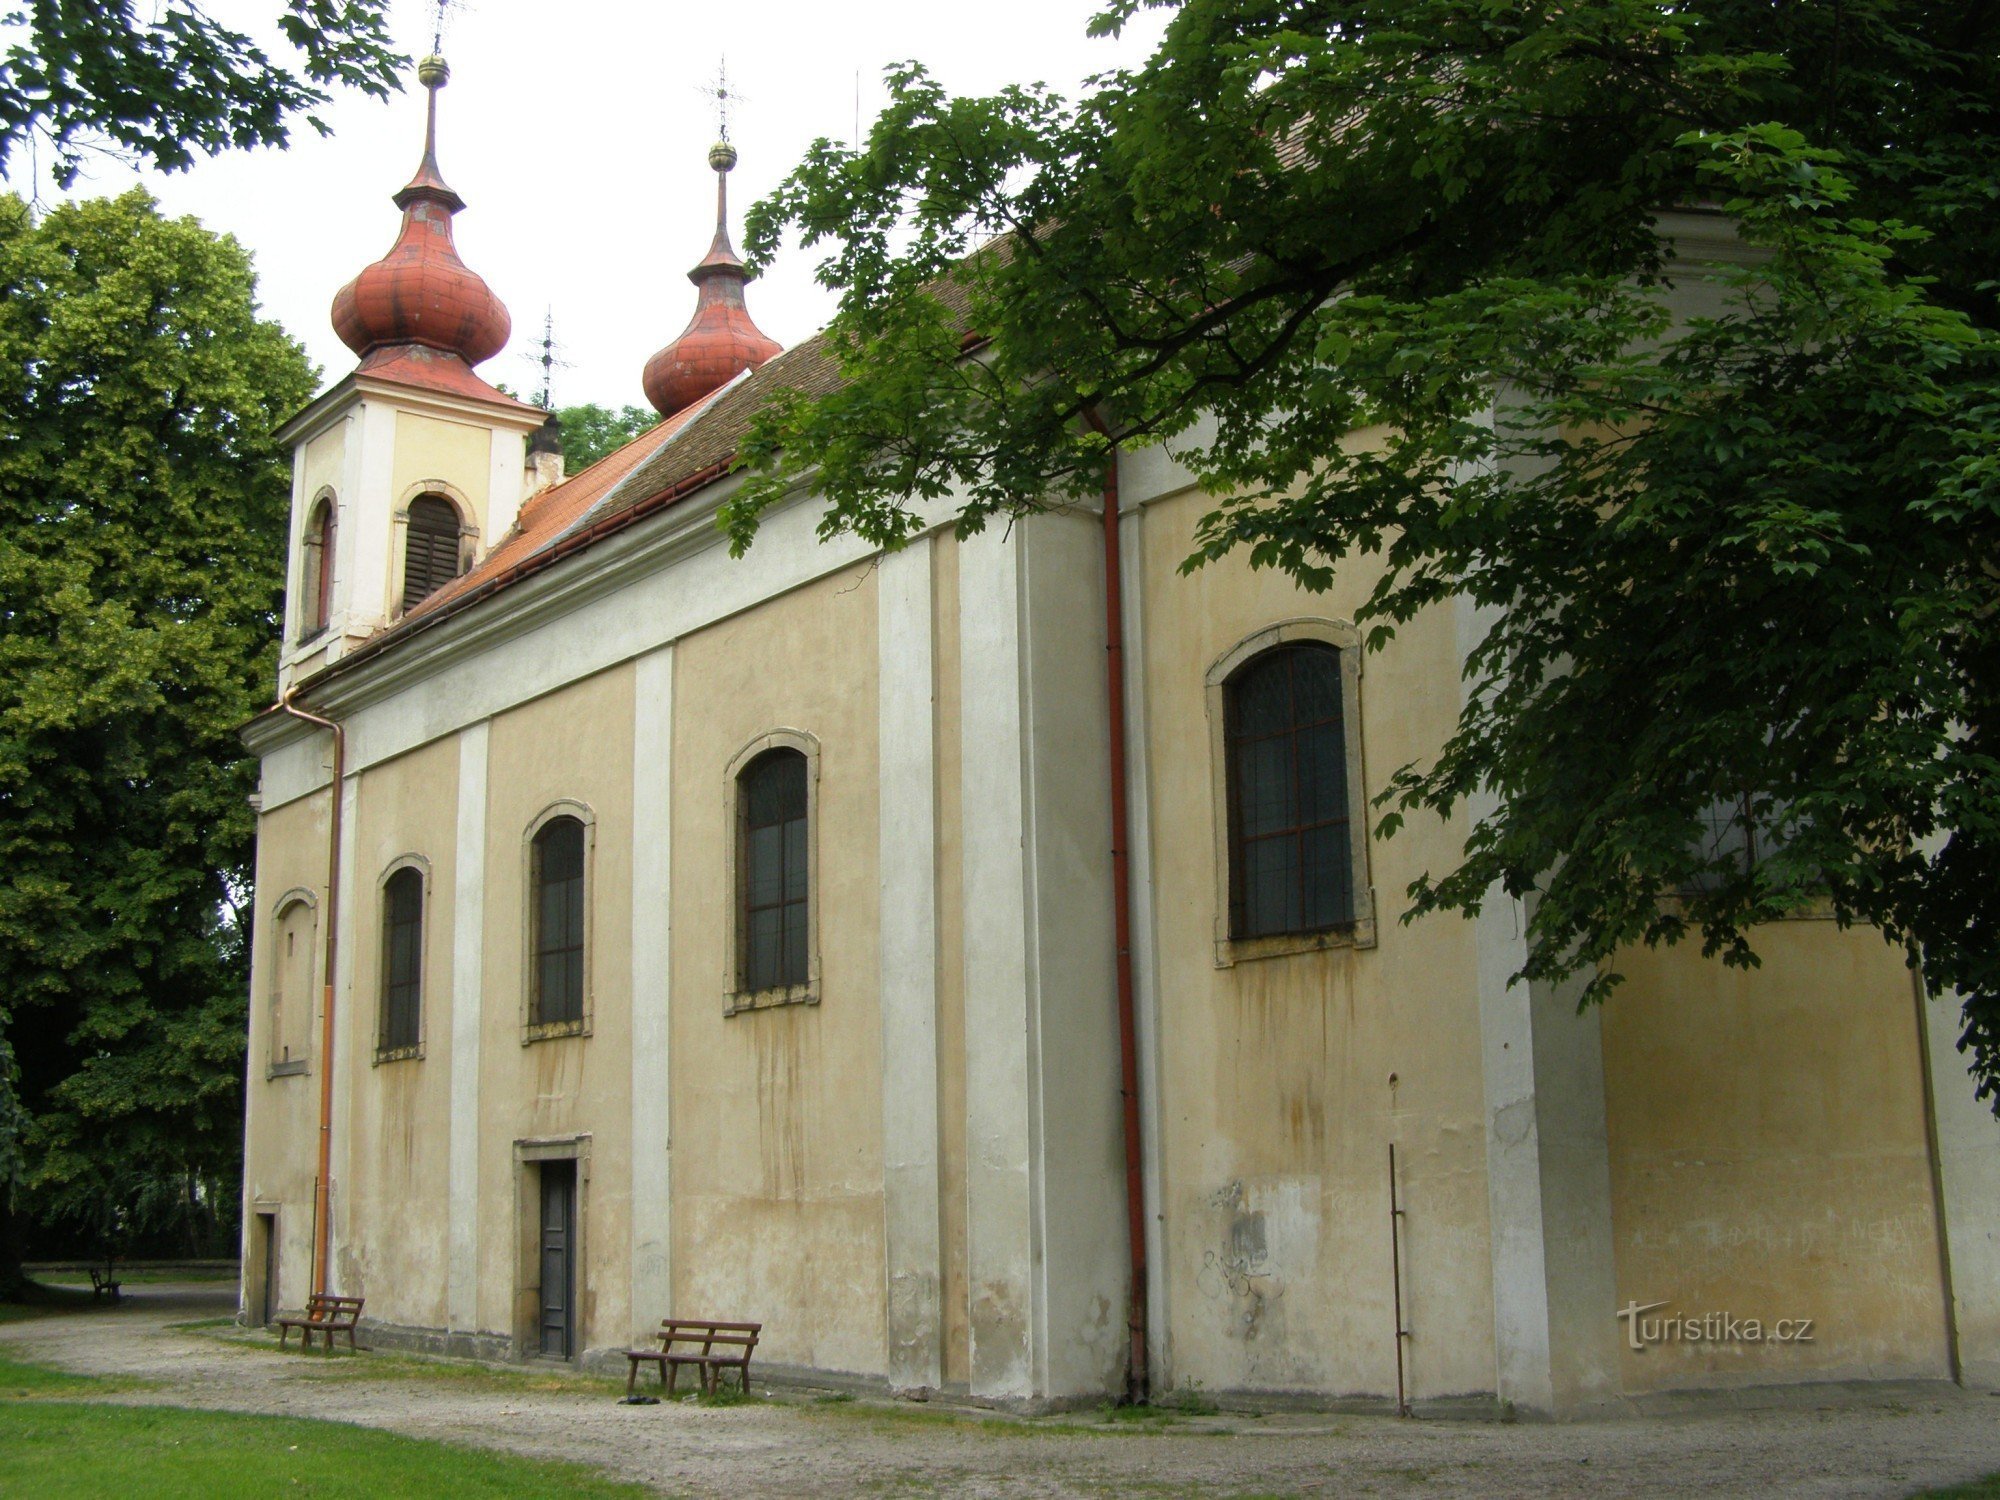 Nový Bydžov - церква Святої Трійці